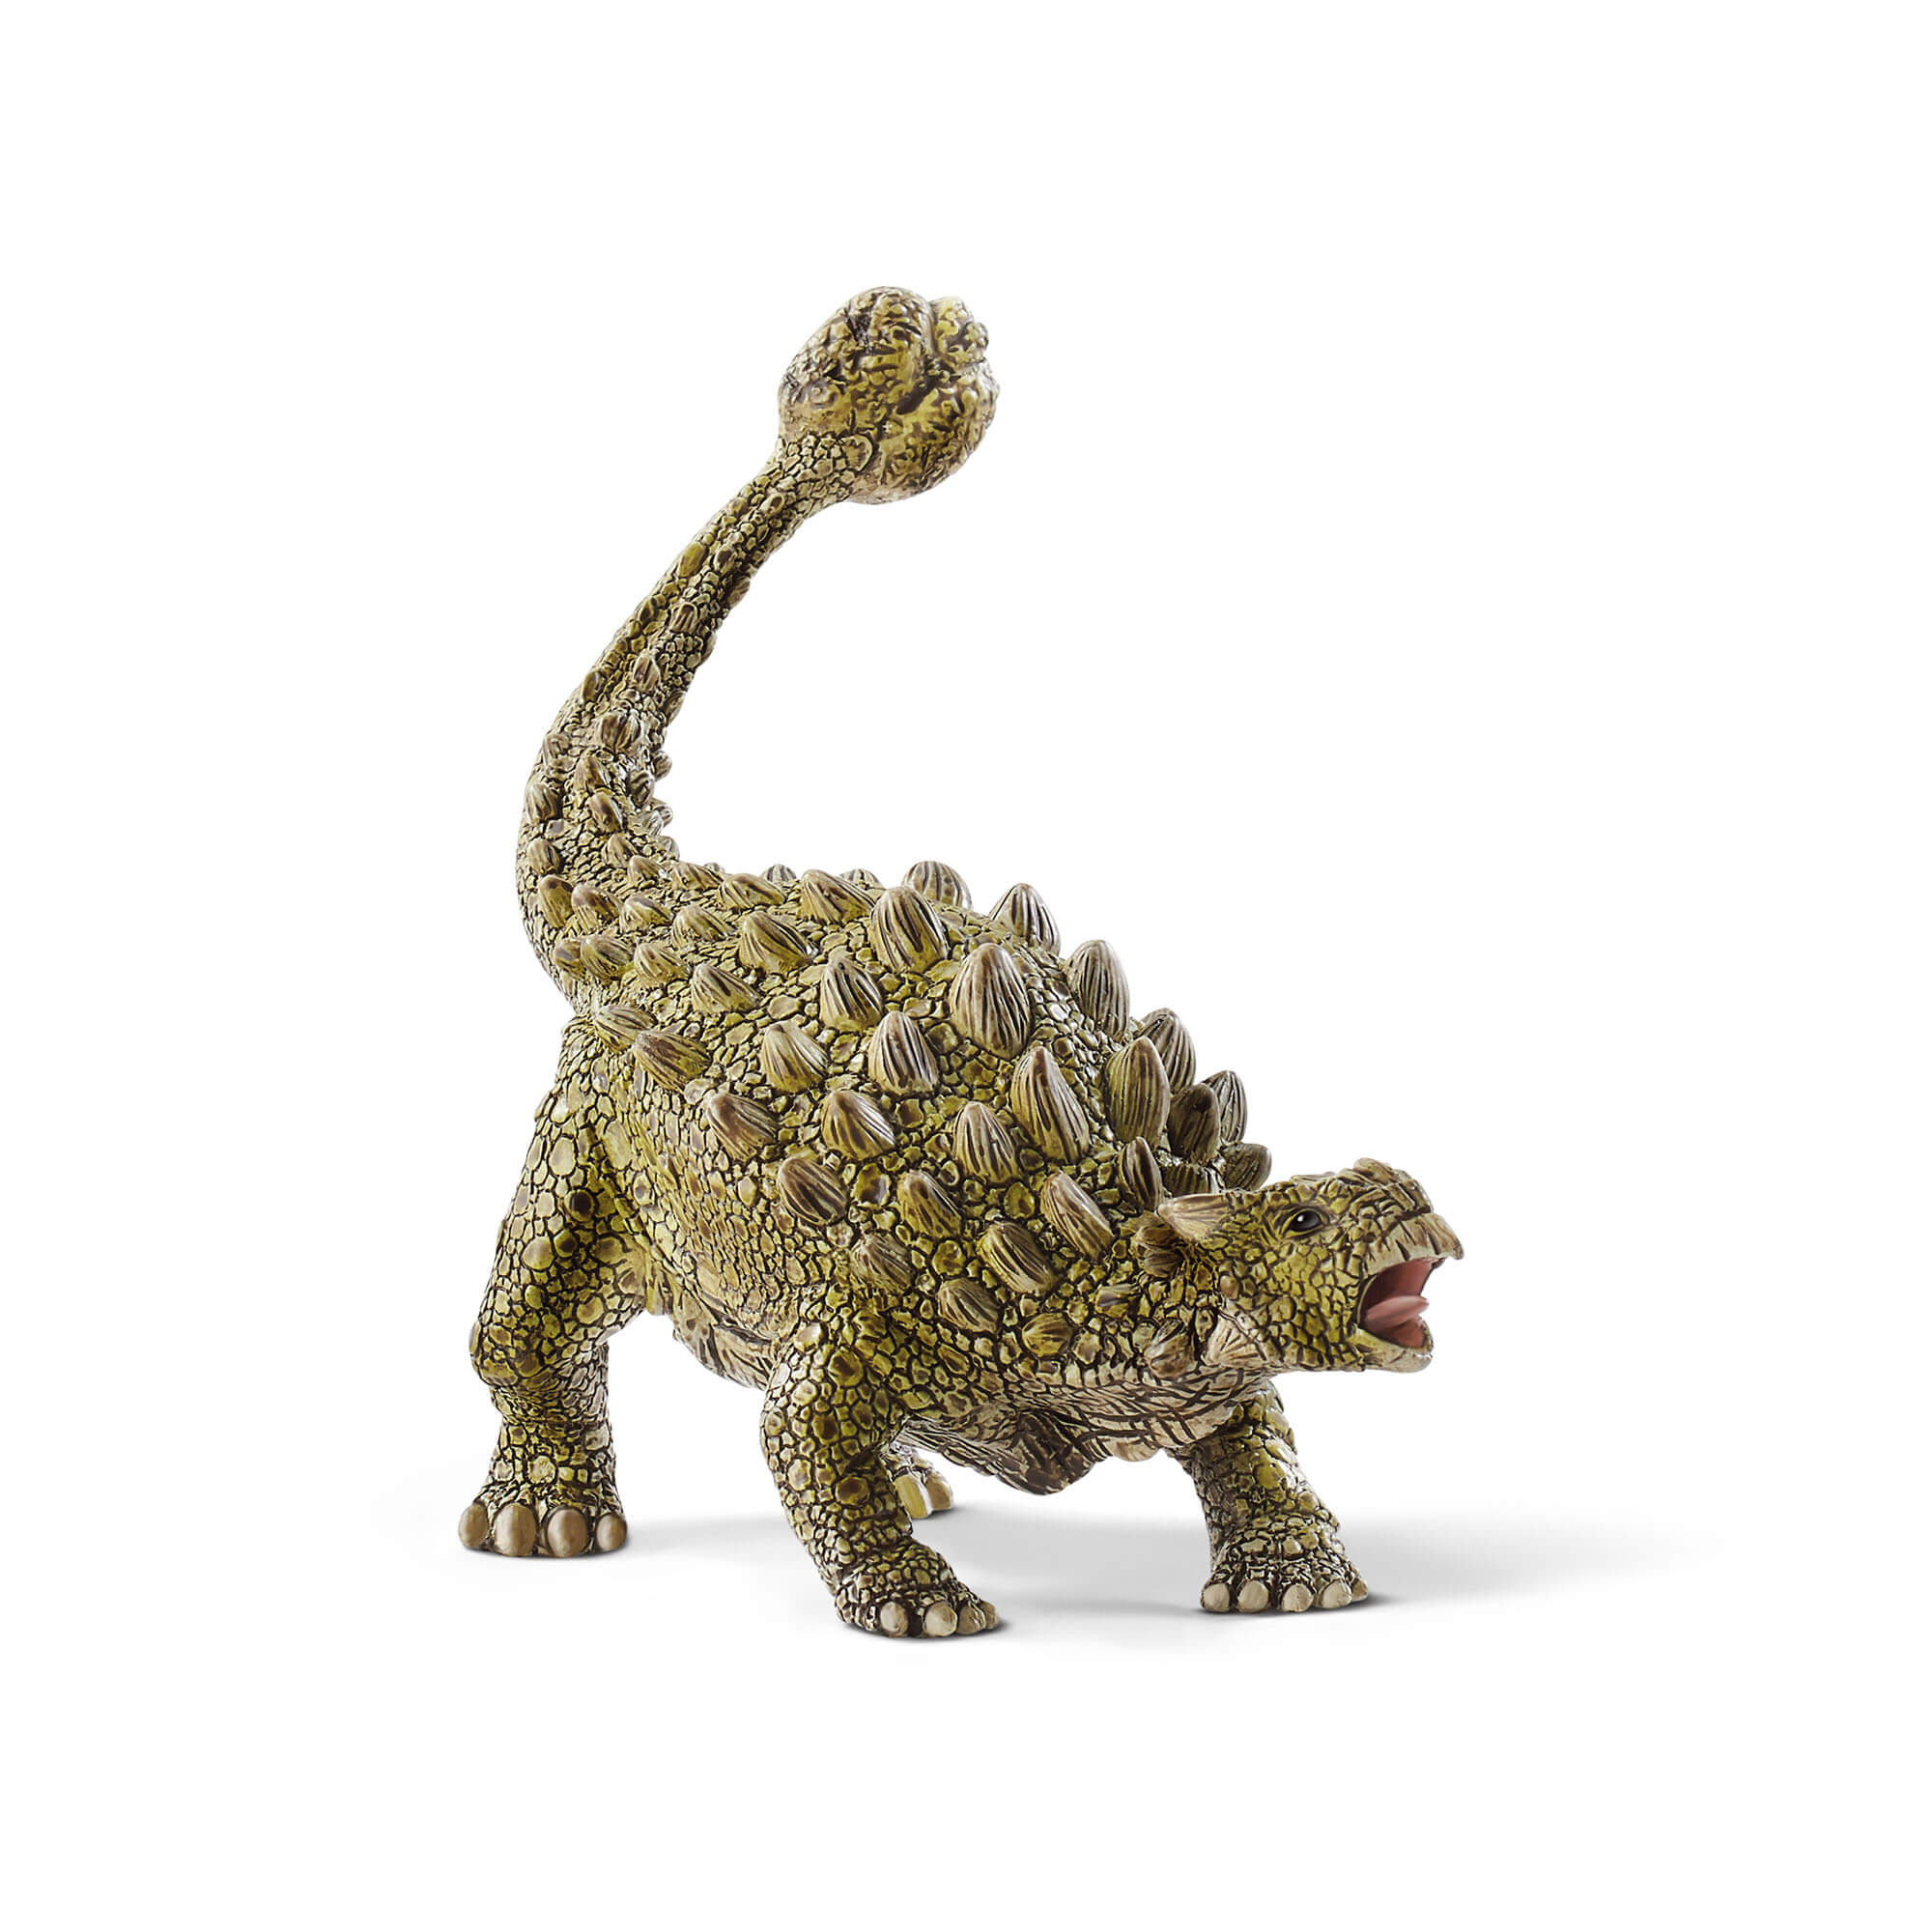 Schleich Dinosaurs Ankylosaurus Figure